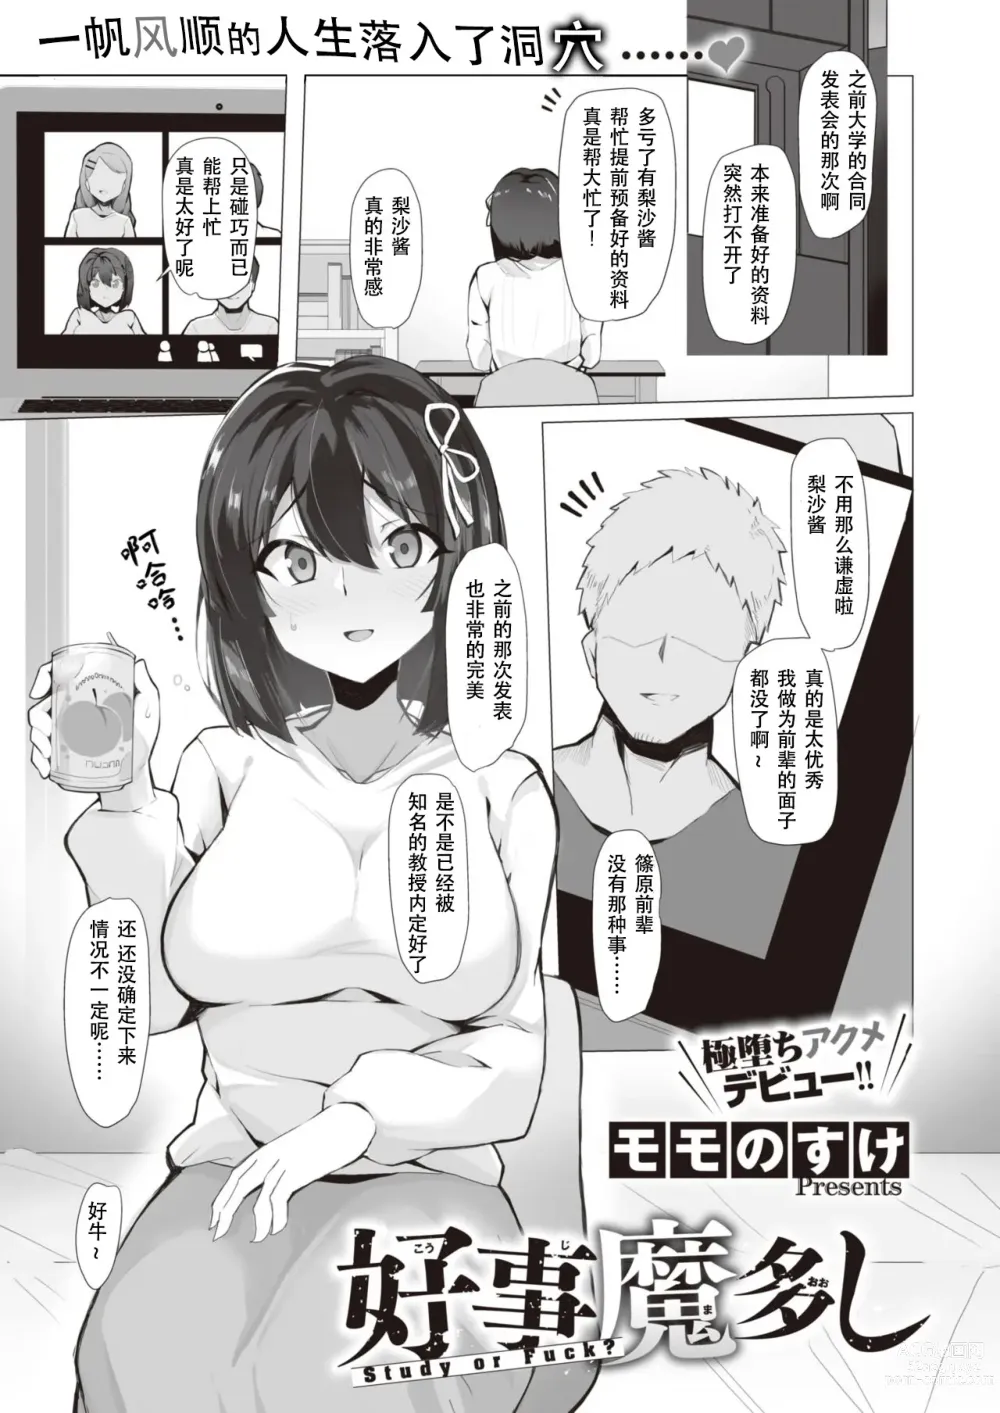 Page 1 of manga Koujimaooshi - Study or Fuck?